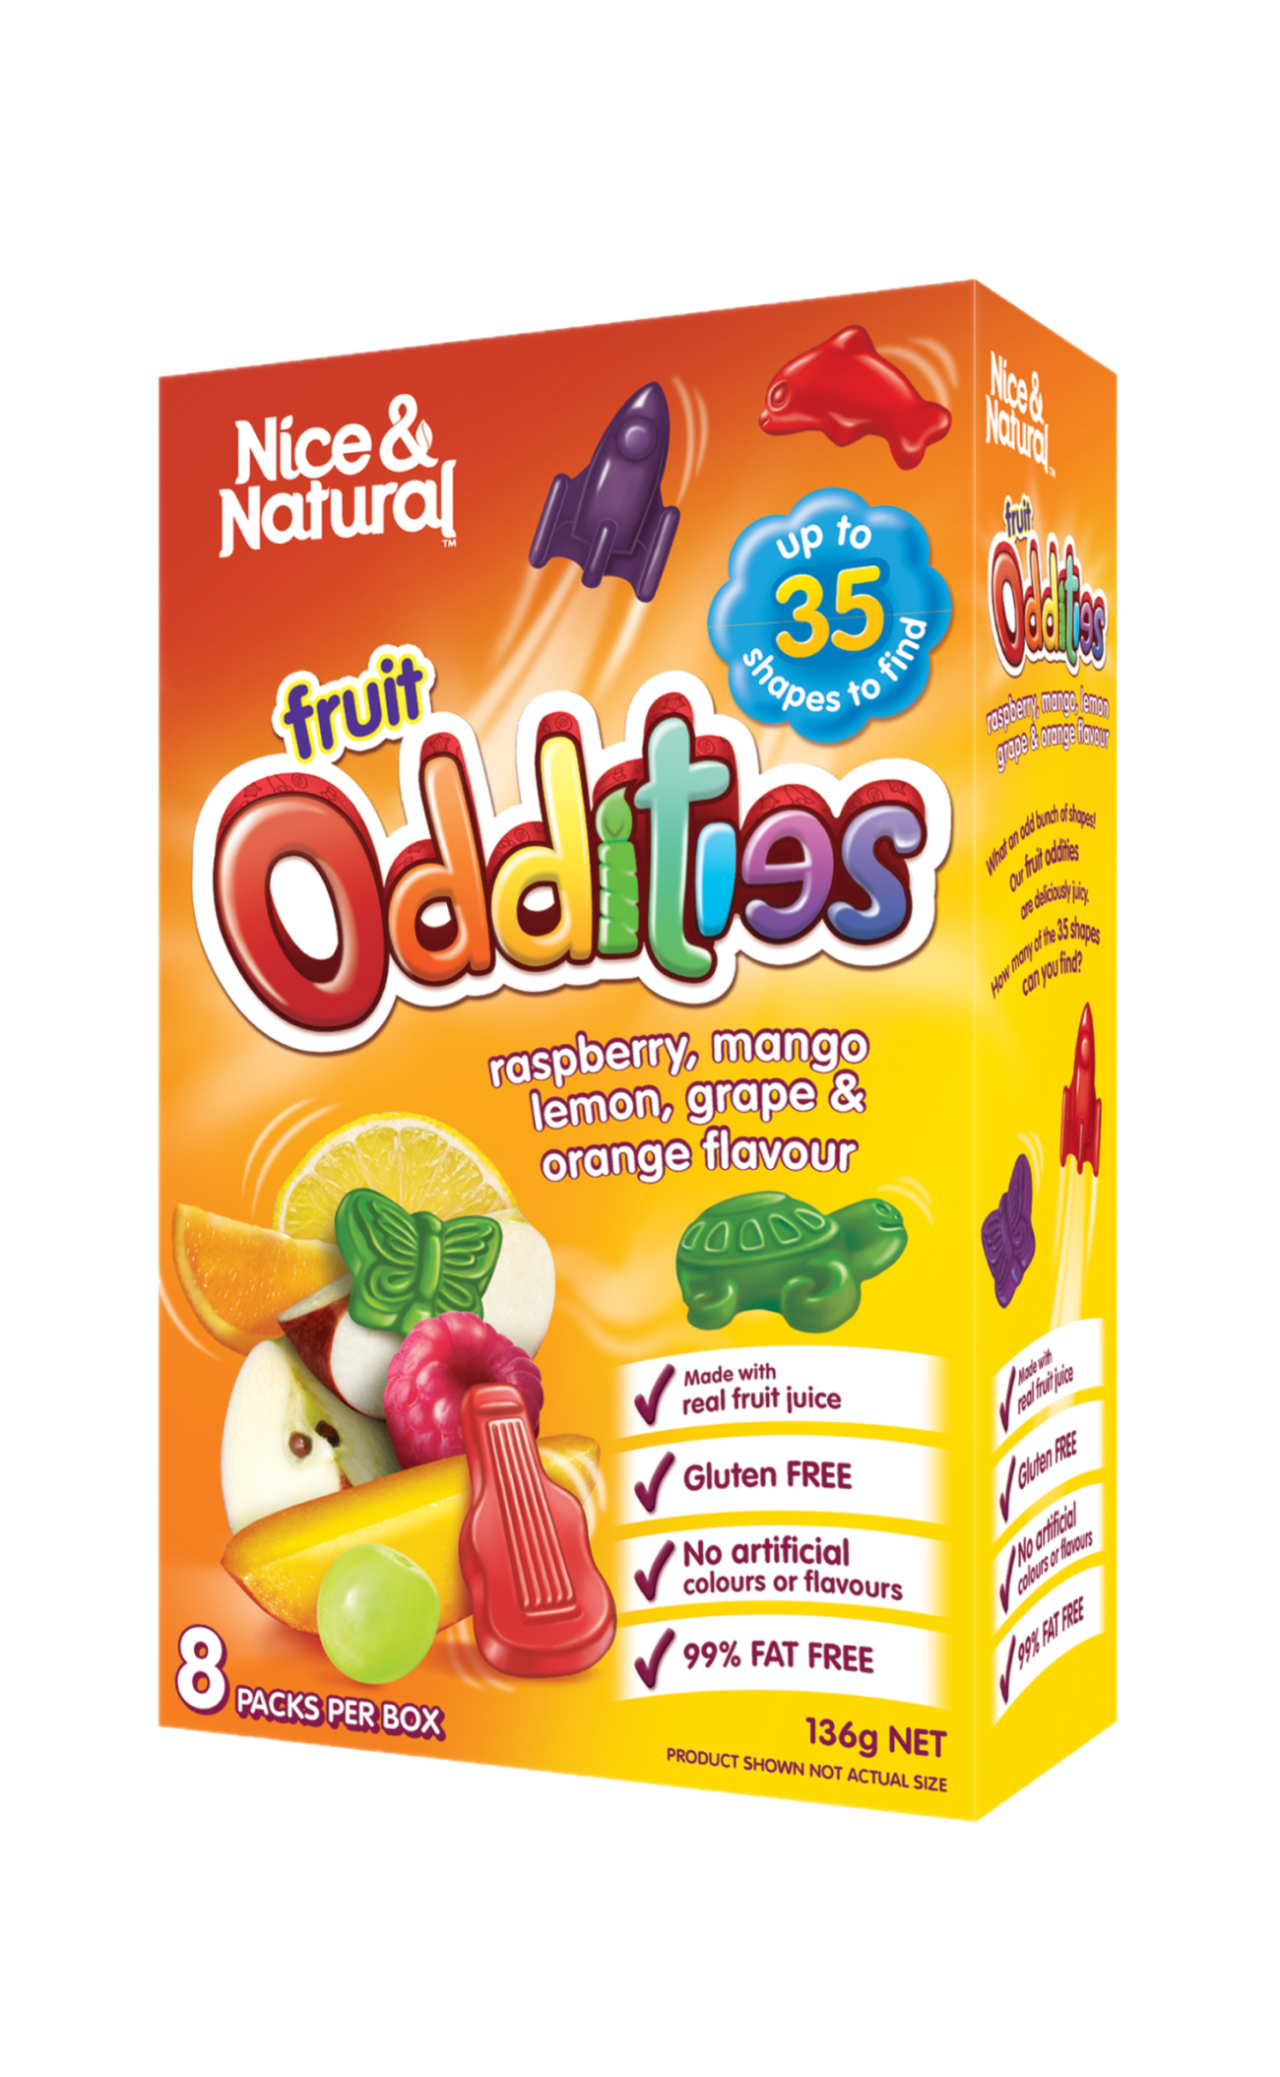 Fruit Oddities product image